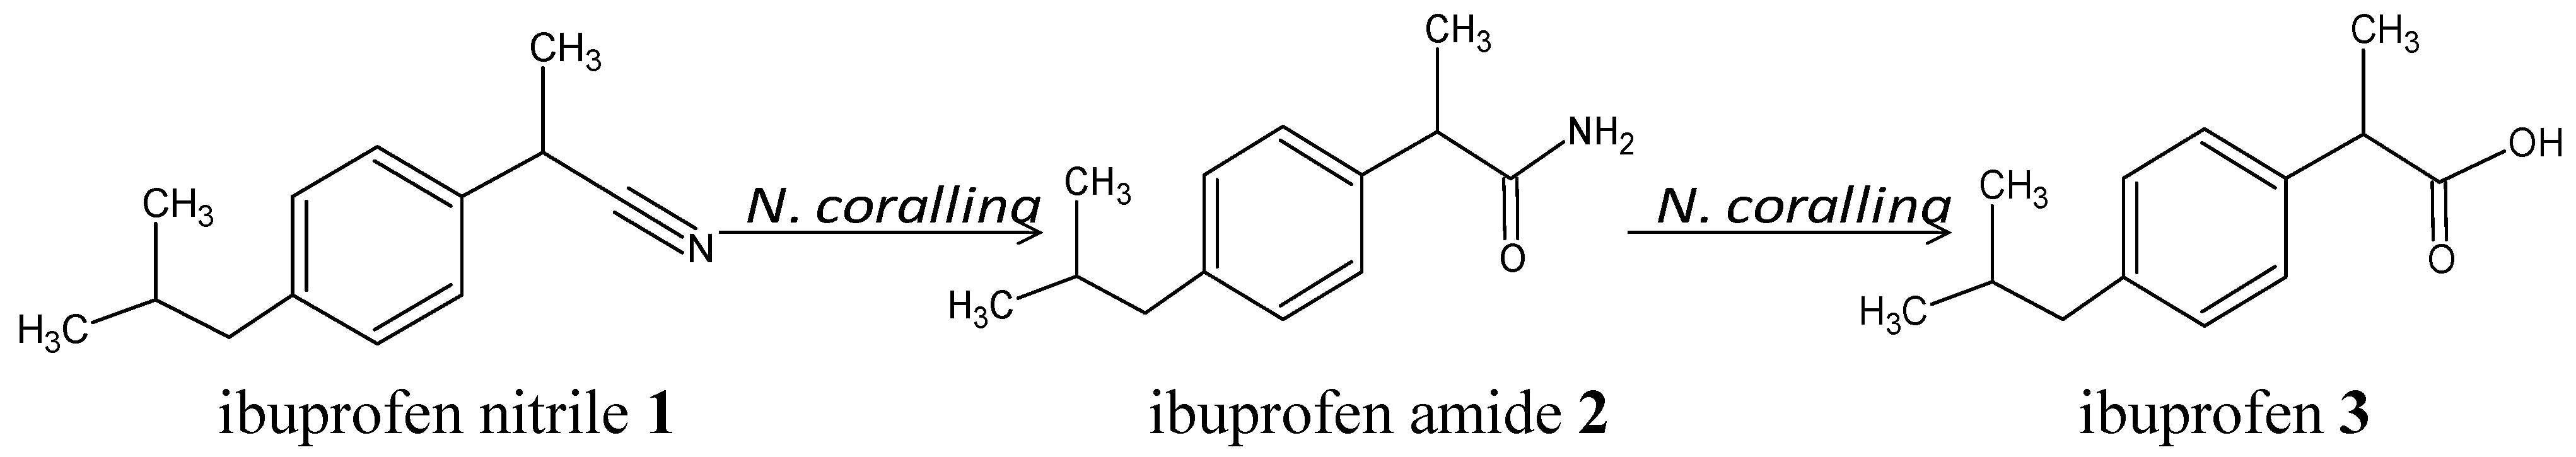 Hydrolysis of Ibuprofen Nitrile and Ibuprofen Amide and Deracemisation of I...